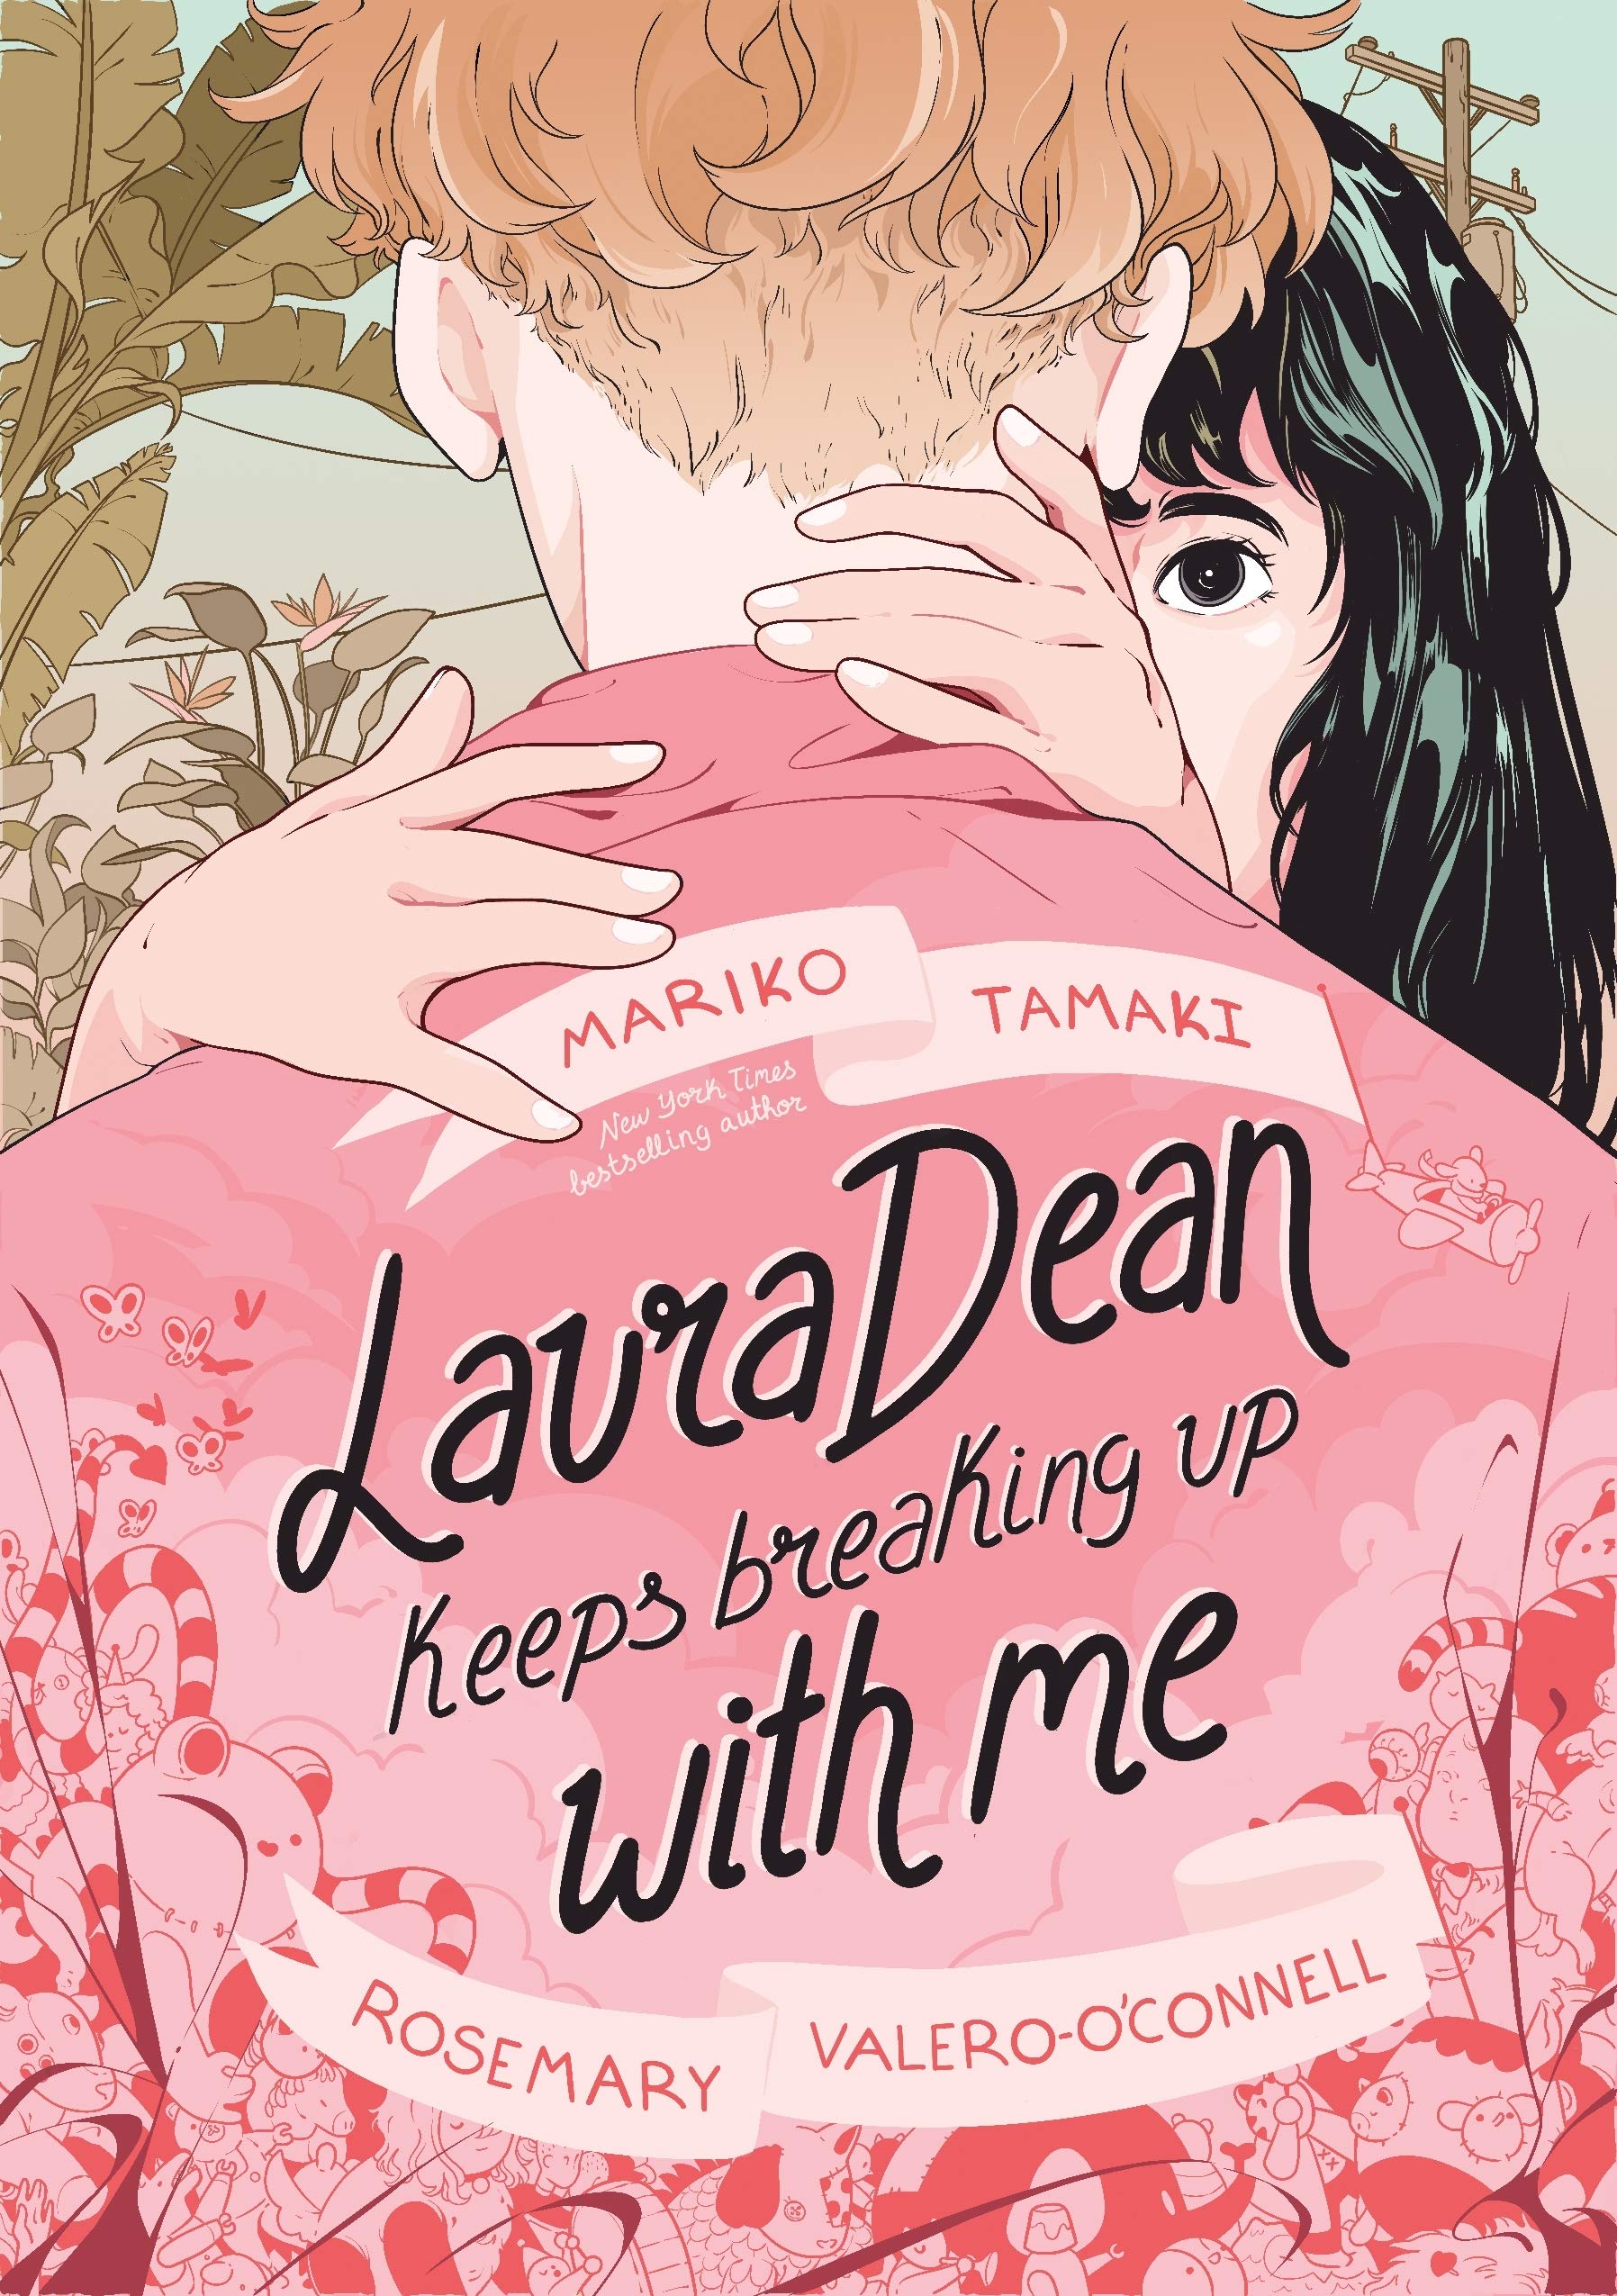 Laura Dean Keeps Breaking up With Me | Mariko Tamaki